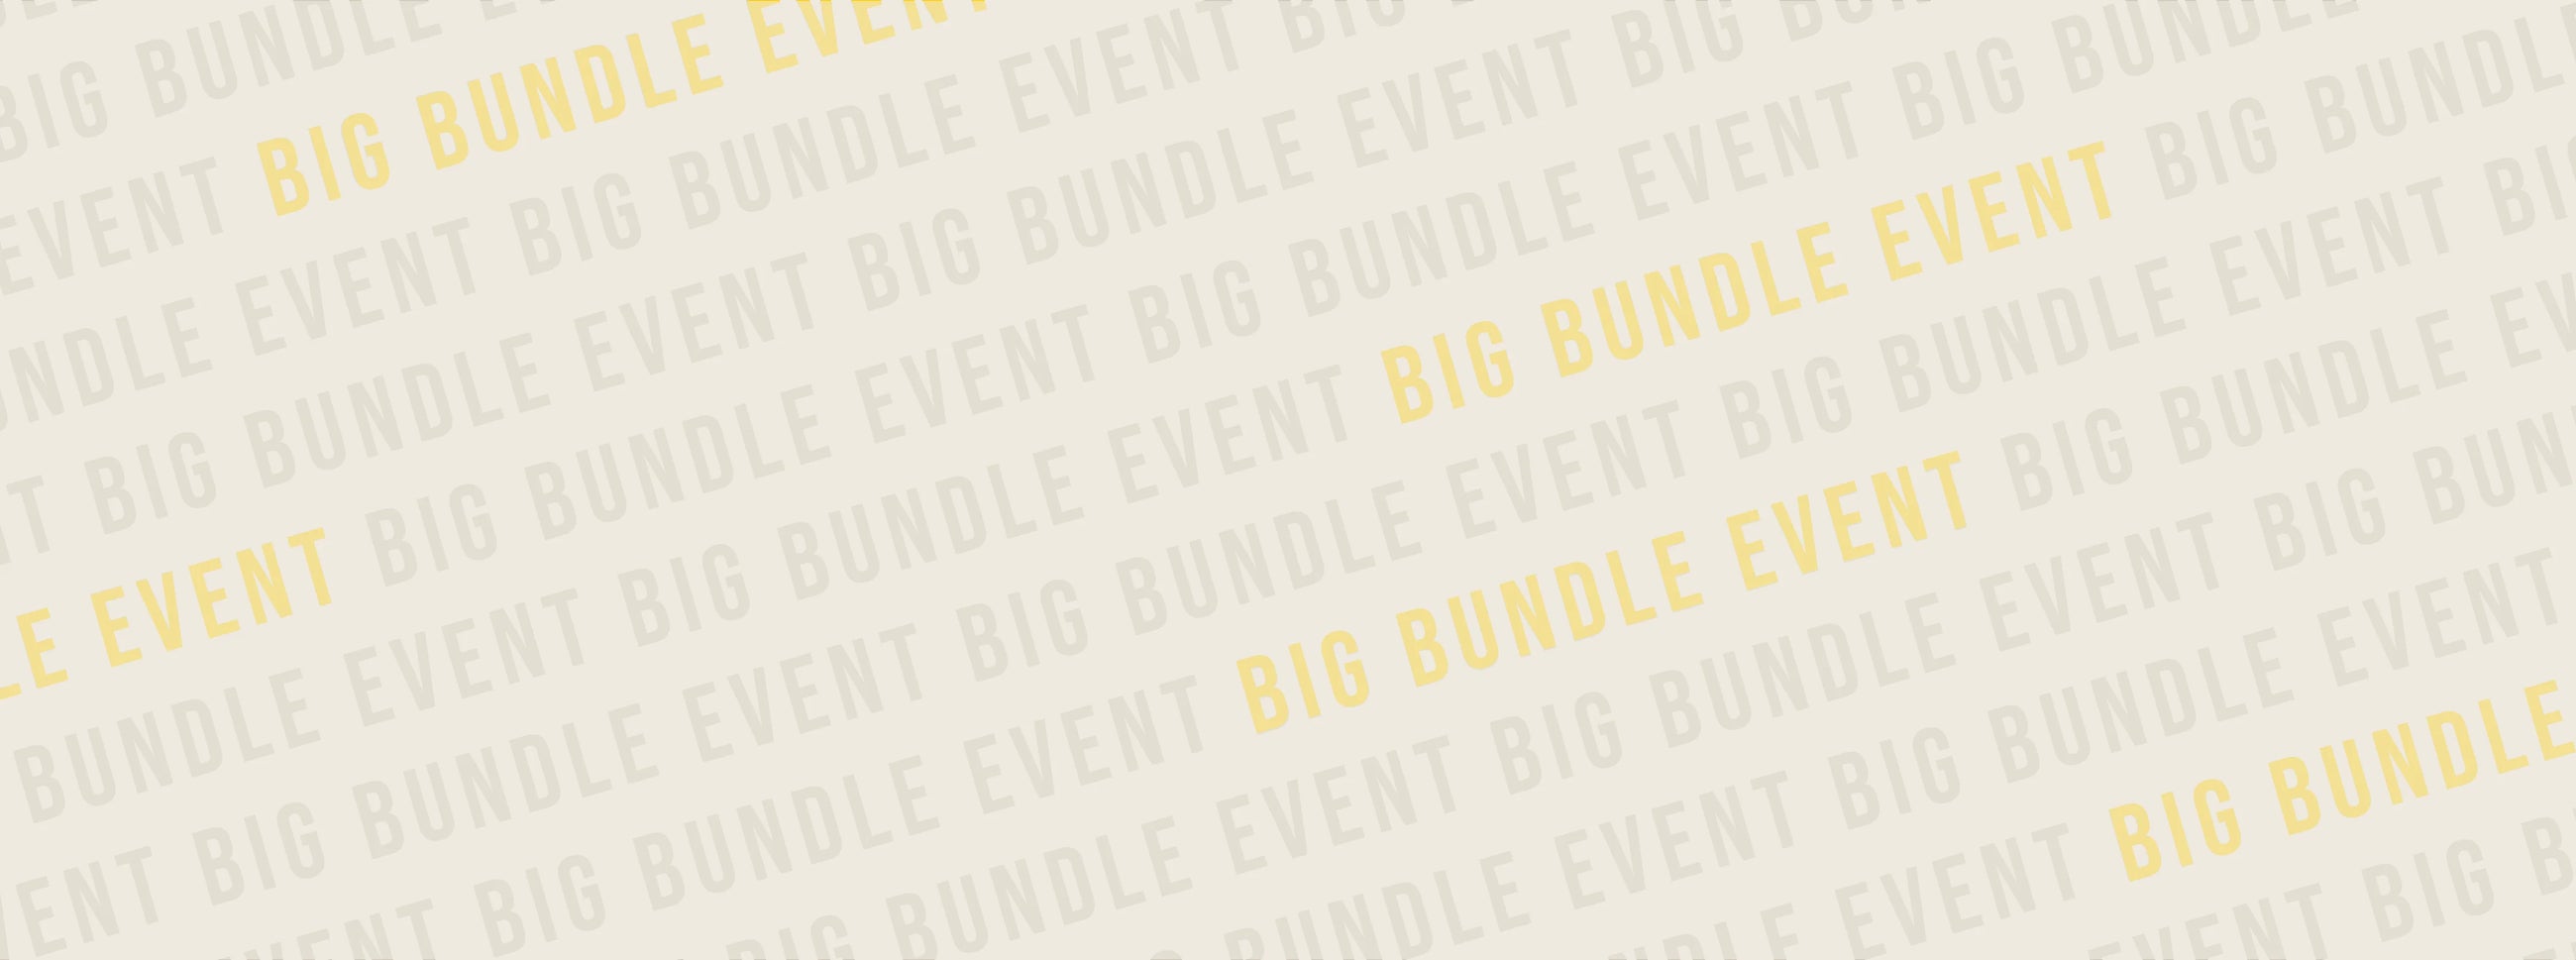 BIG Bundle Event